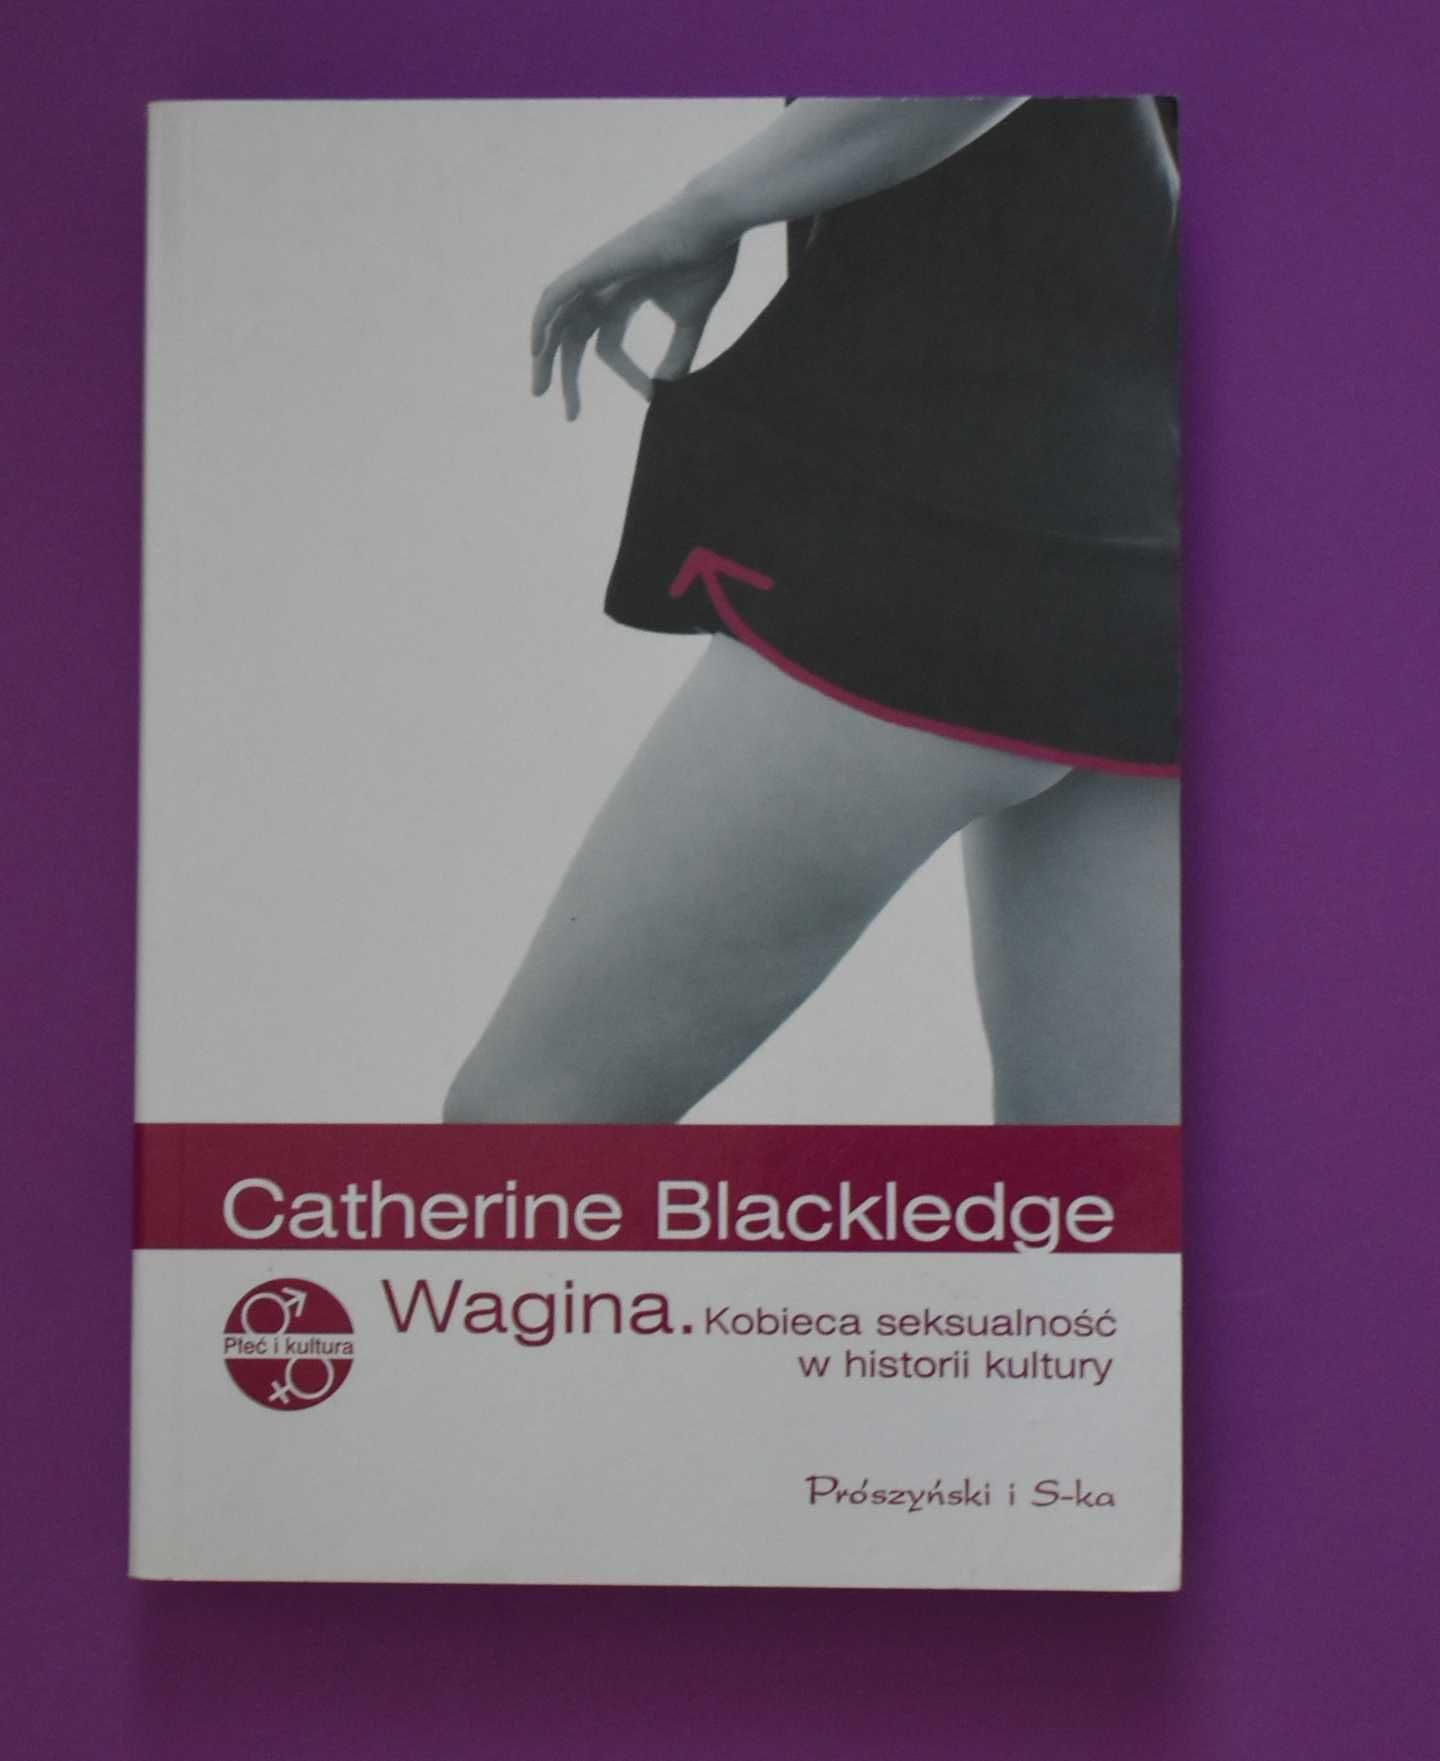 Catherine Blackledge - Wagina.Kobieca seksualność w historii kultury